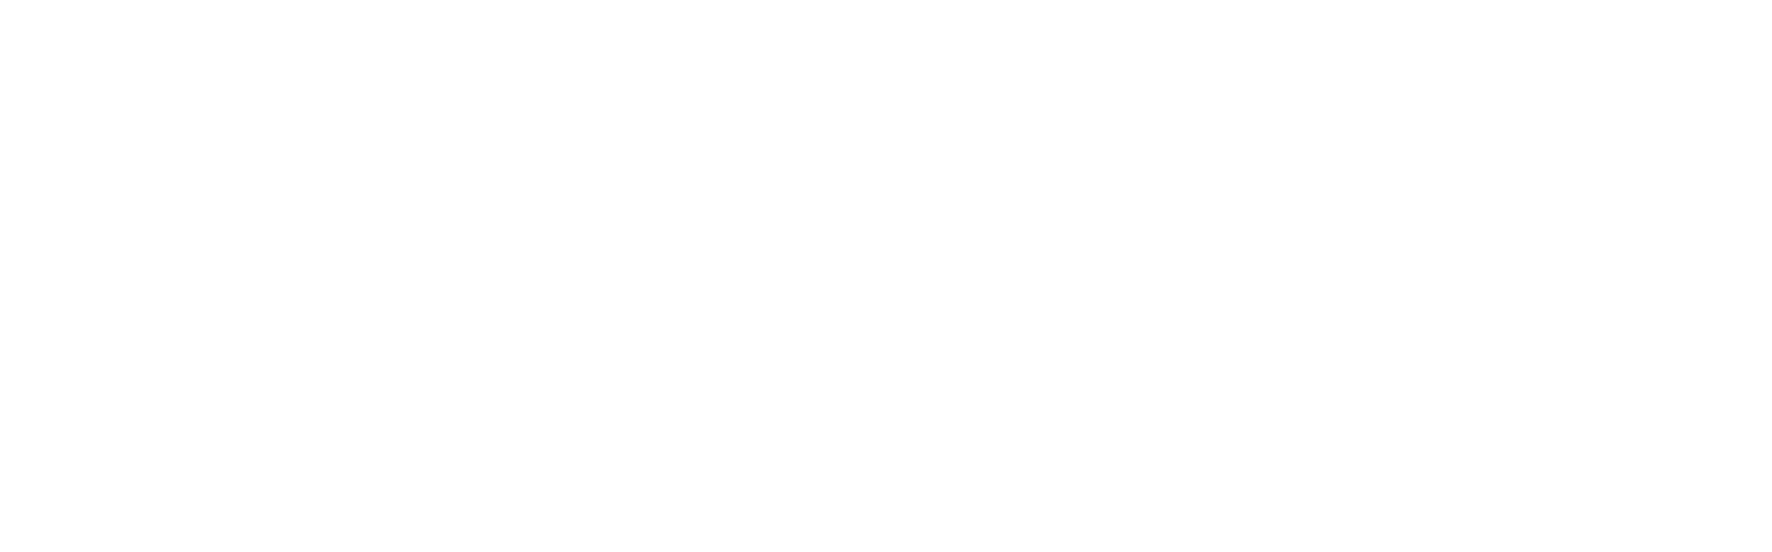 Fantasia 2023 Official Selection laurels